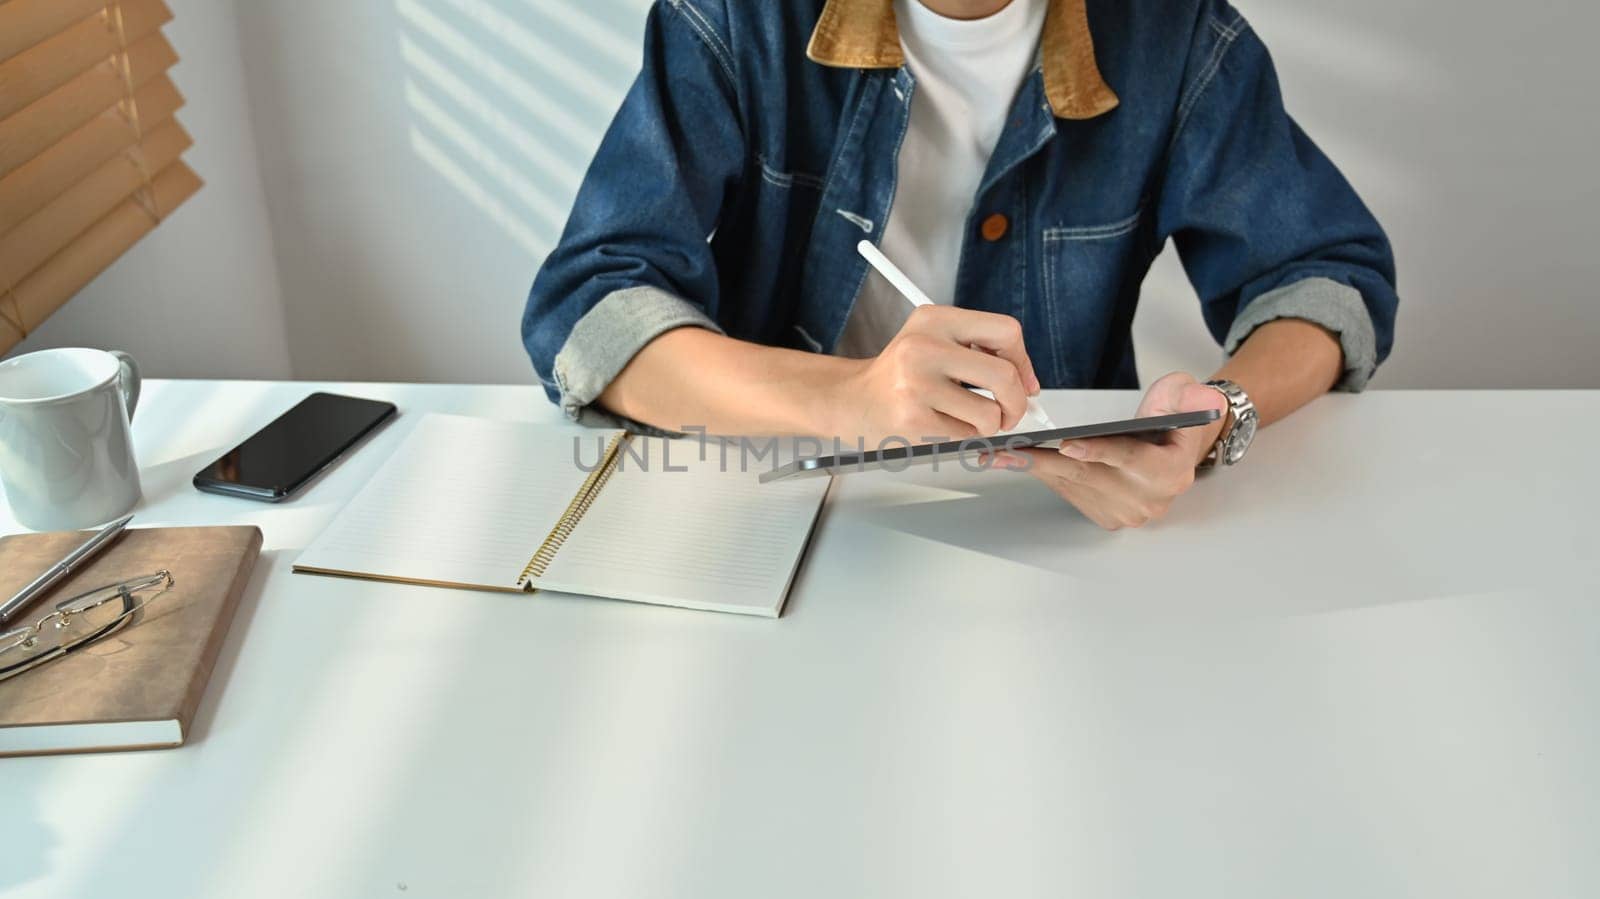 Man freelancer wearing jeans jacket browsing internet or sending email on digital tablet during working at home.